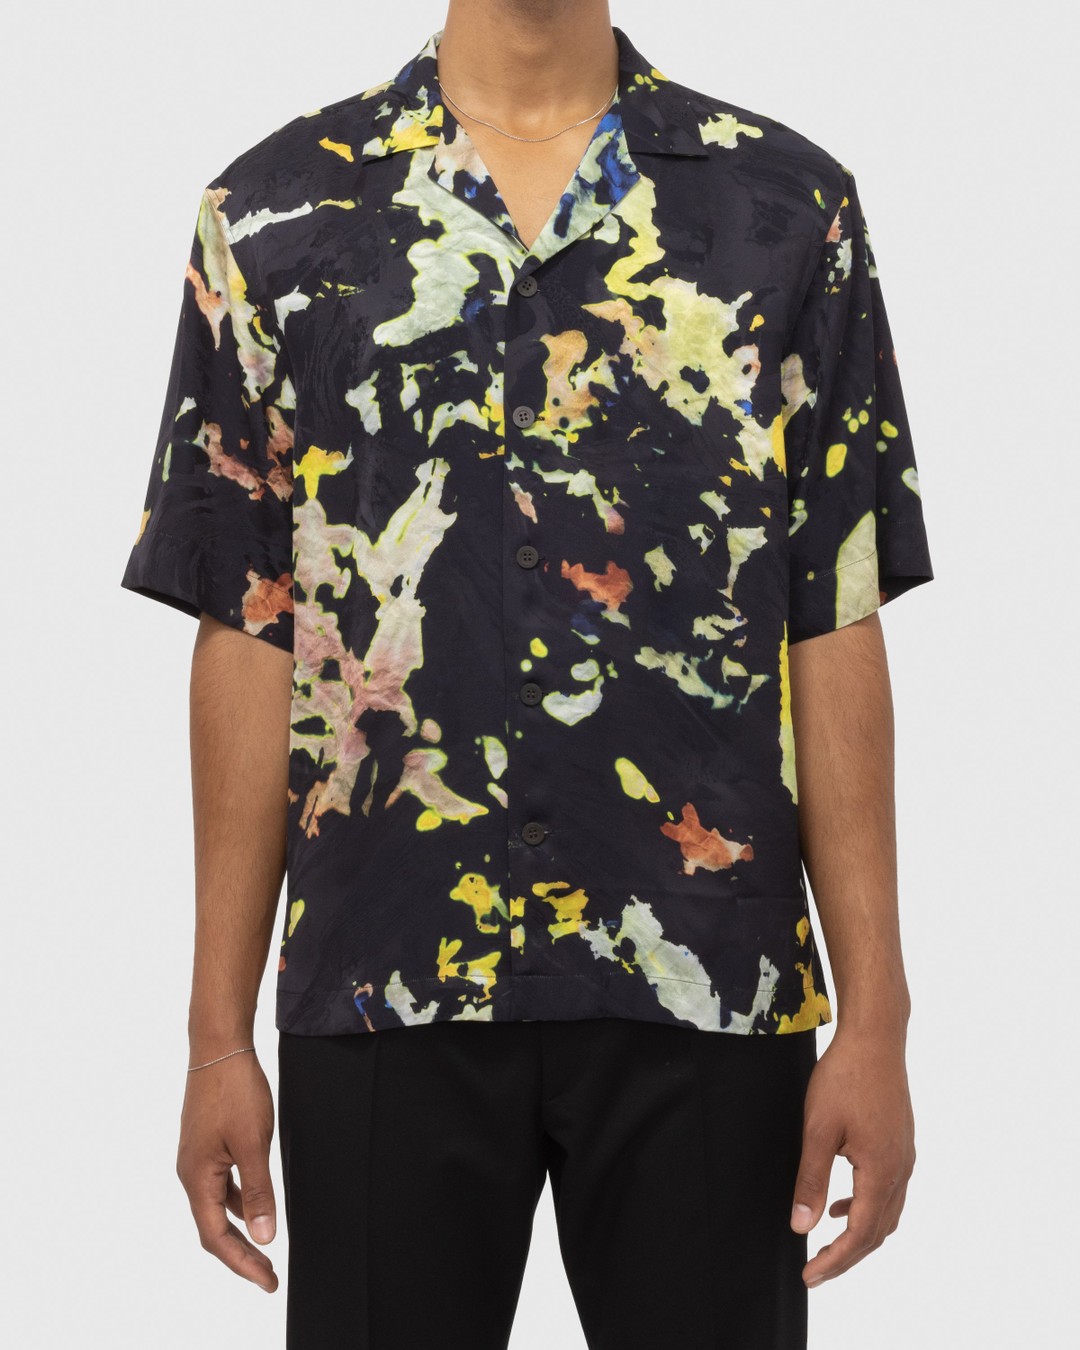 Dries van Noten – Jacquard Cassi Shirt Multi - Shortsleeve Shirts - Multi - Image 4